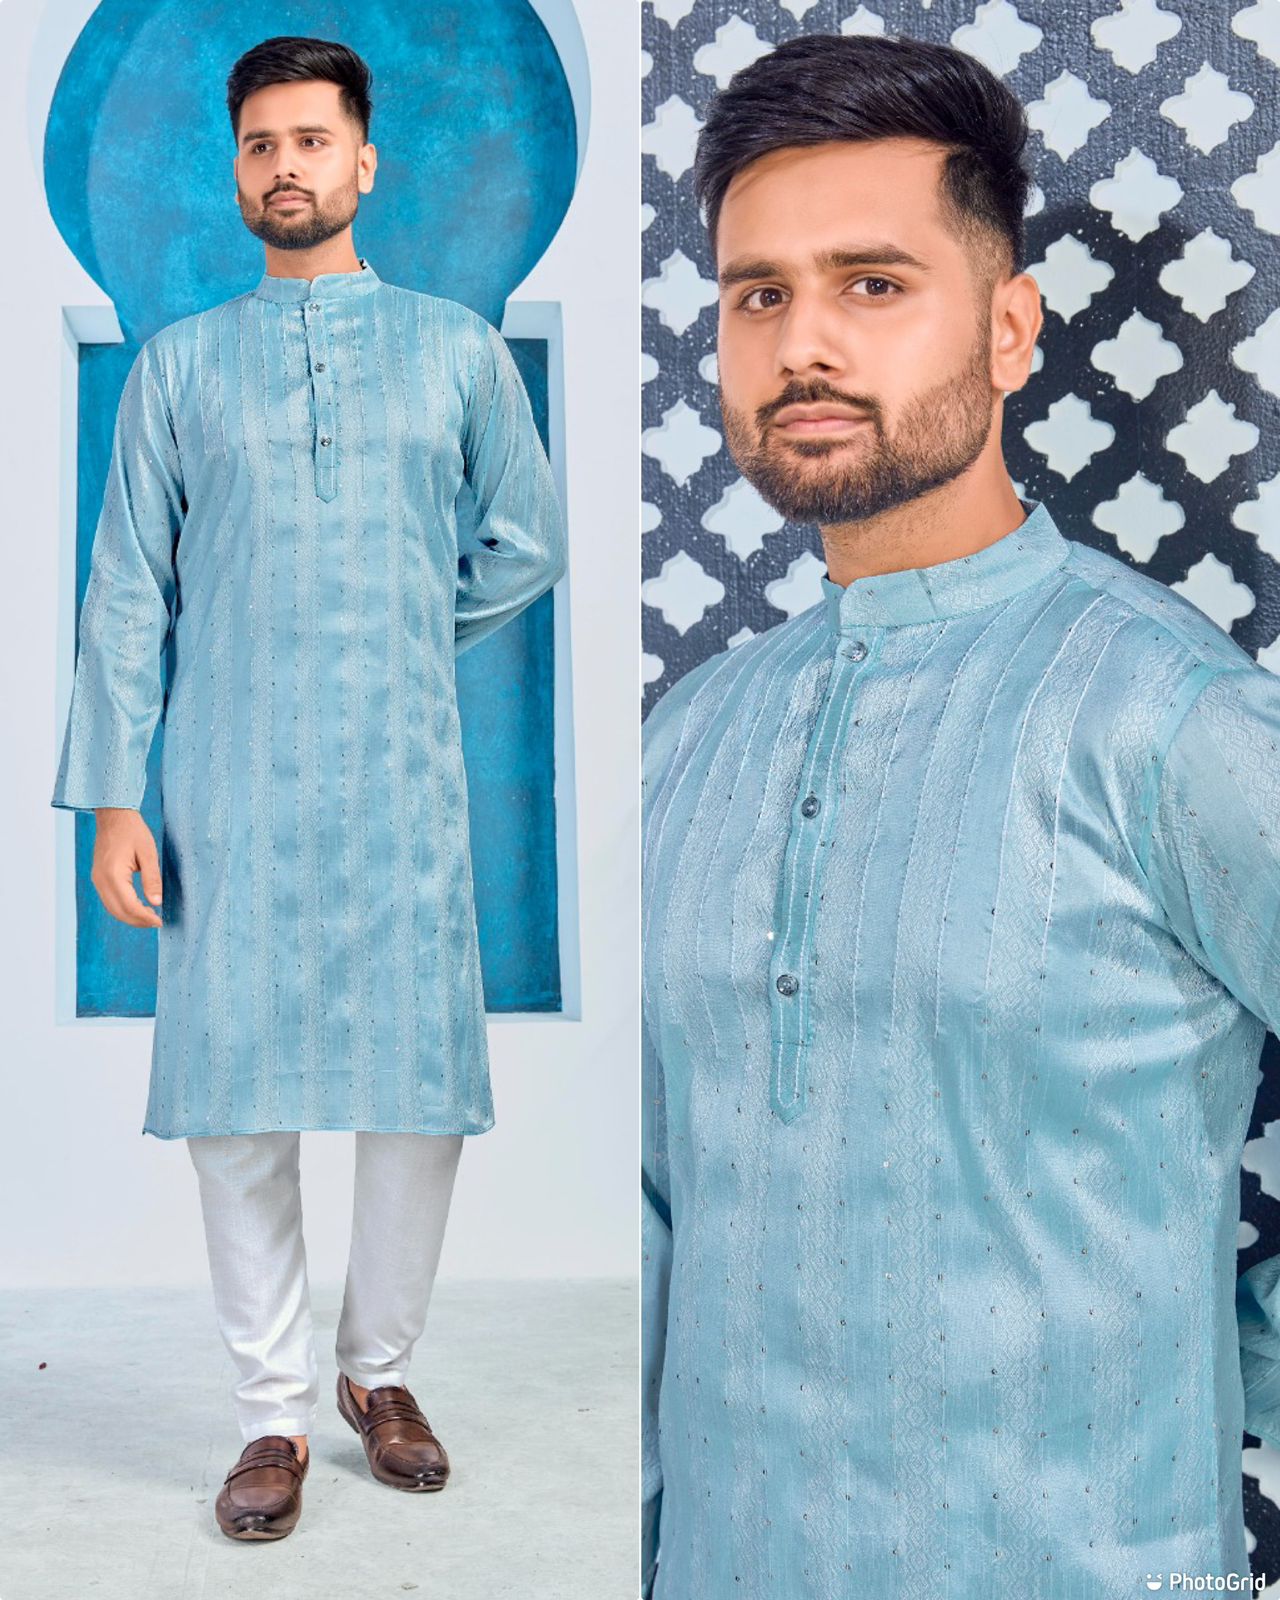 Stylish Traditional Men's Kurta Pajama set mahezon